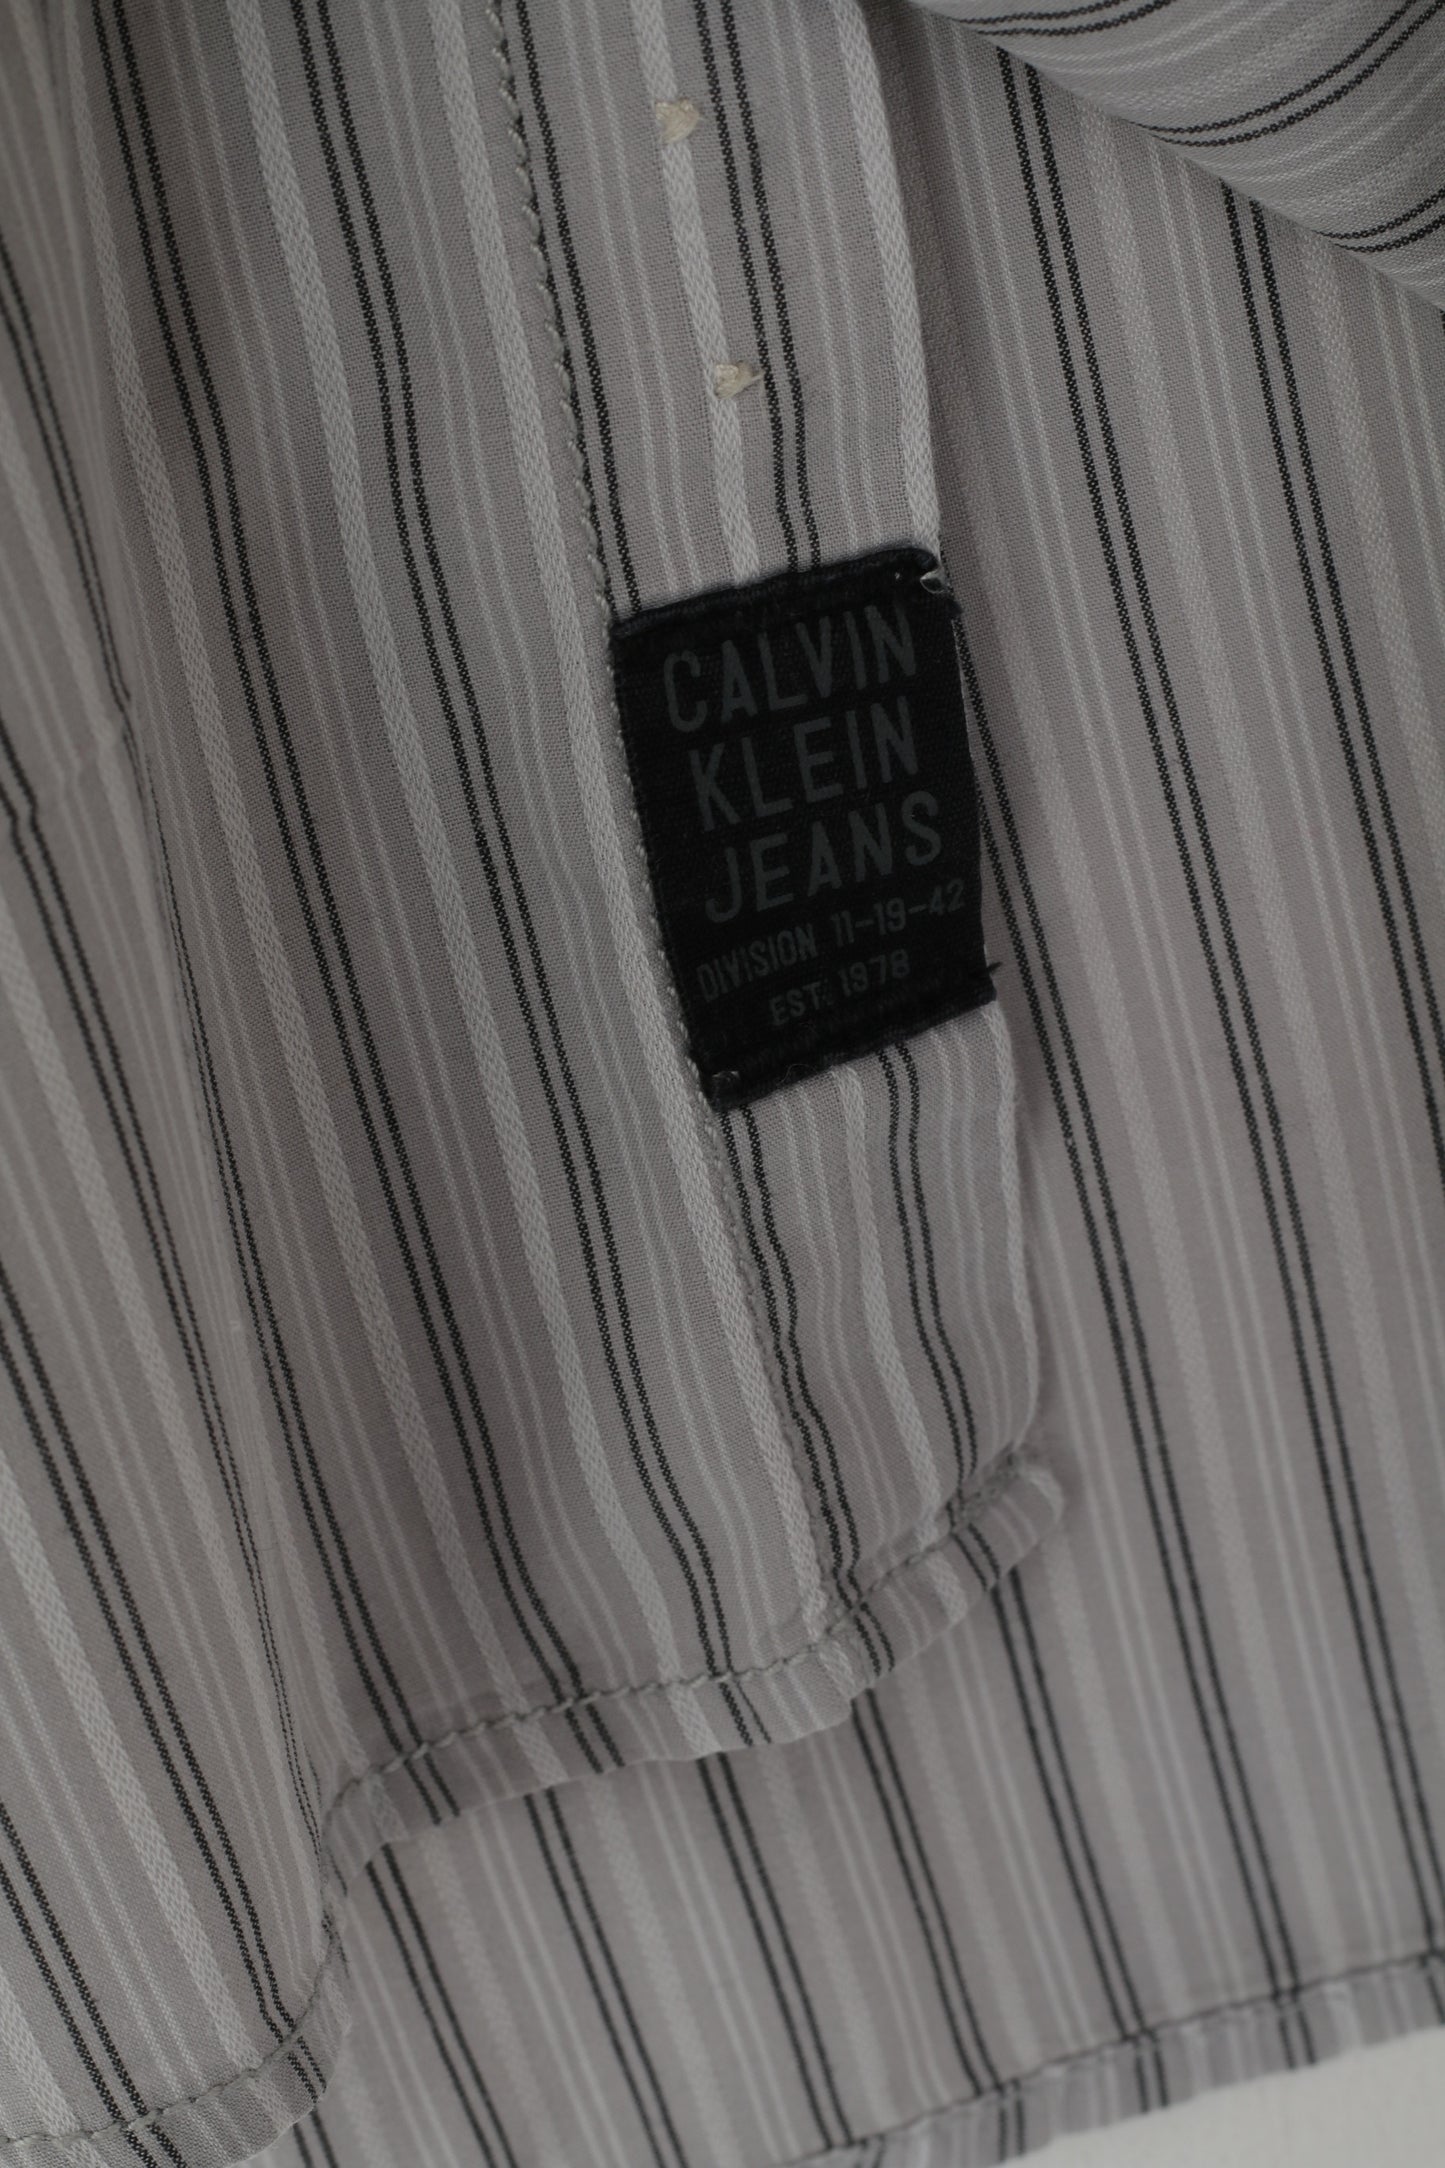 Calvin Klein Jeans Men M Casual Shirt Gray Striped Cotton Long Sleeve Top